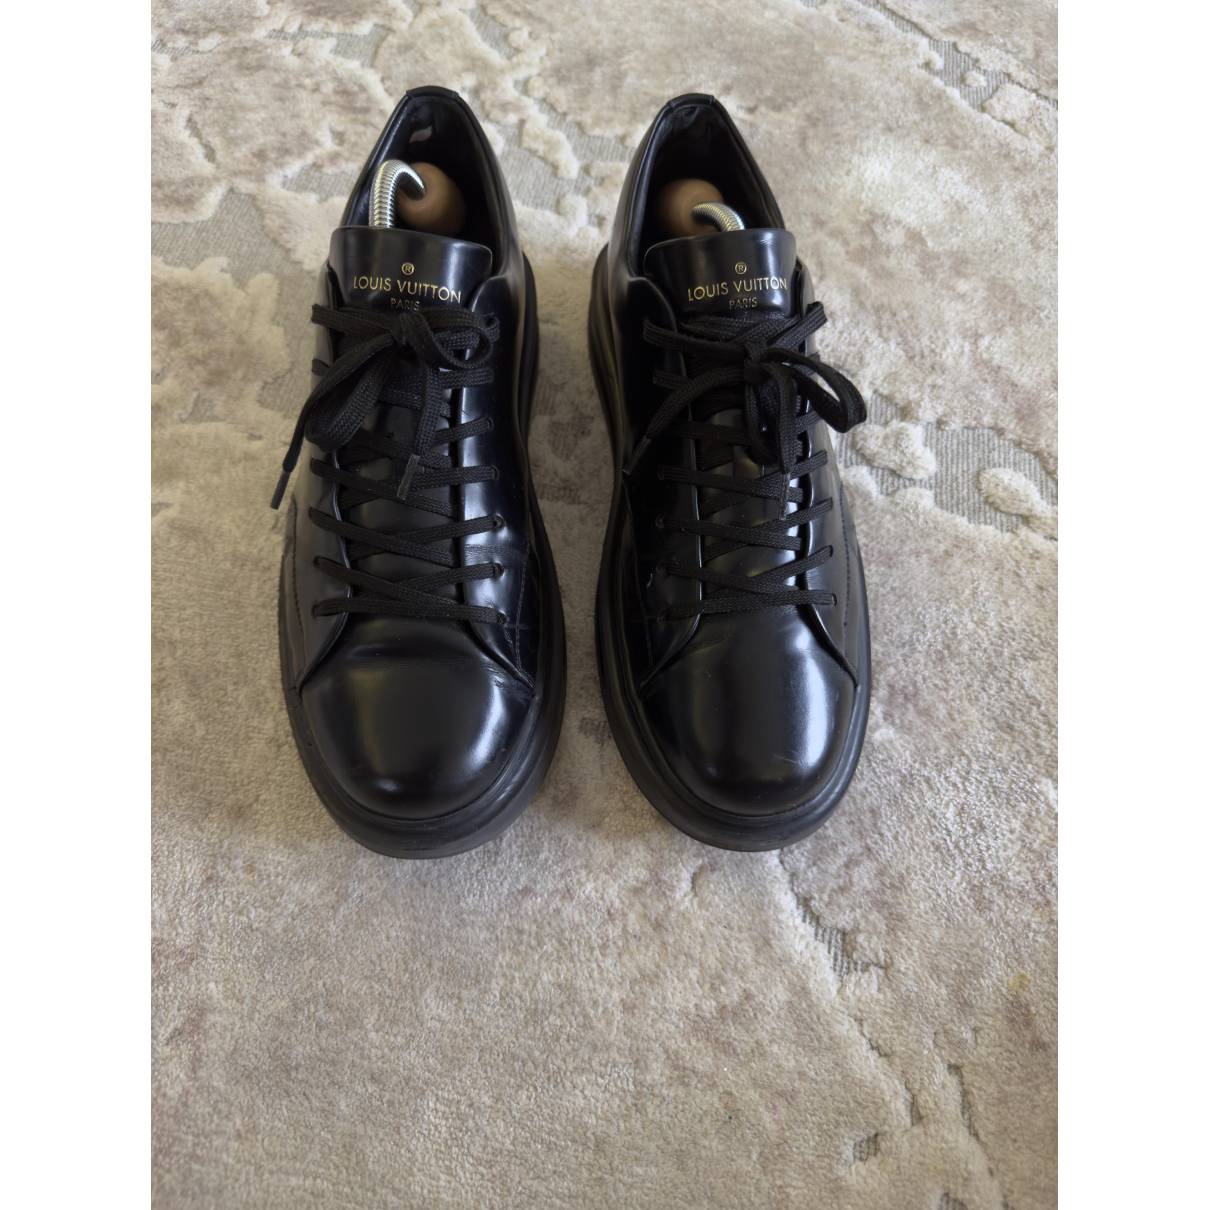 Louis Vuitton Men's Black LeatherBeverly Hill Sneaker size